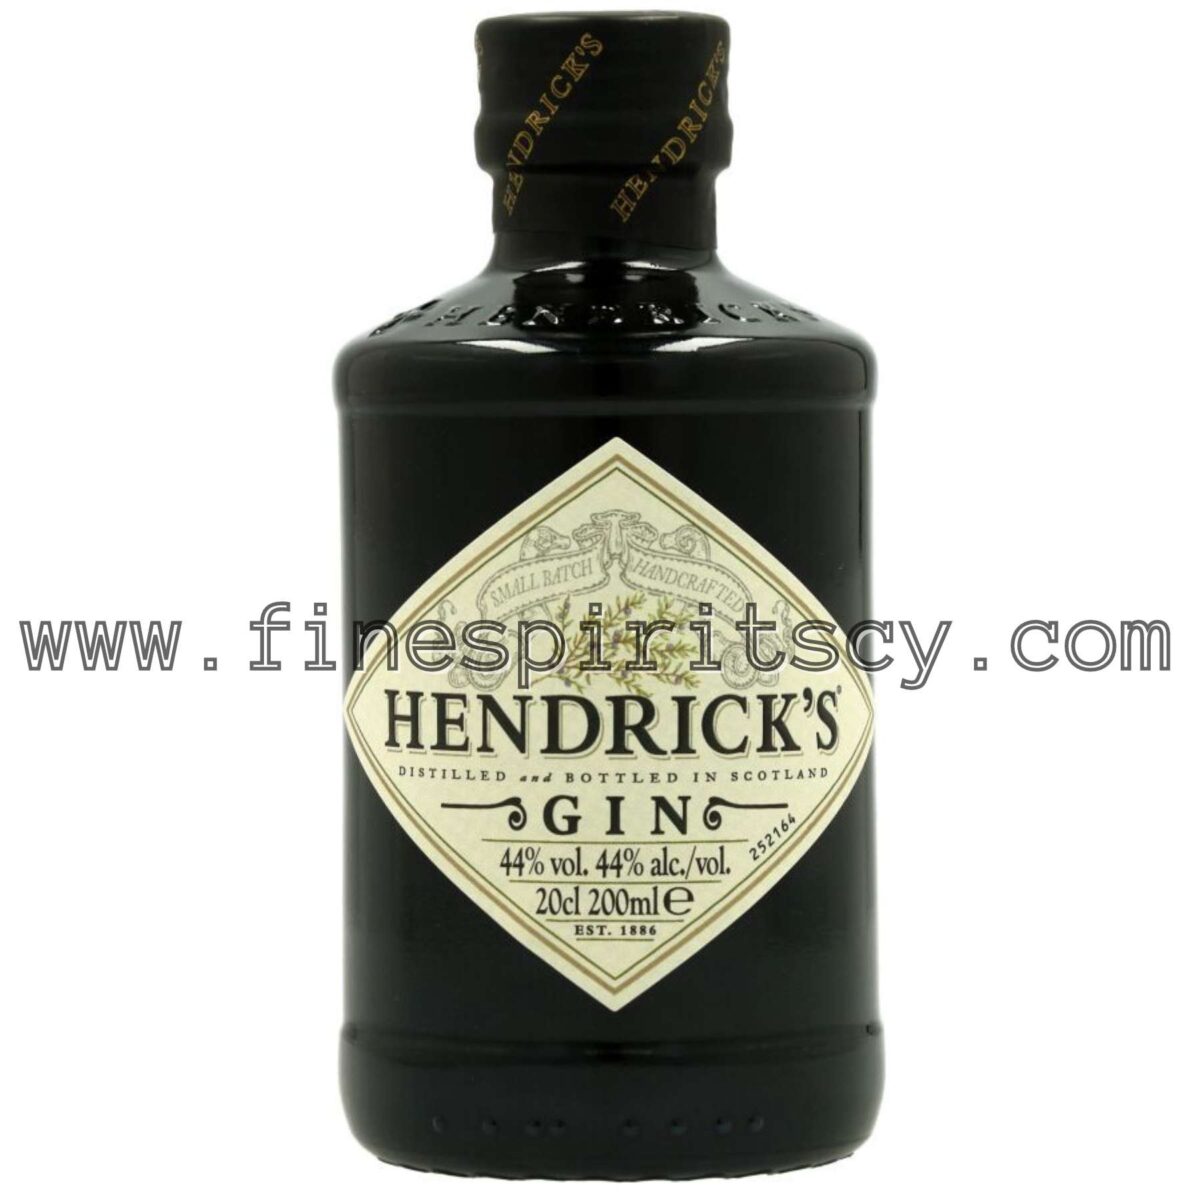 Hendricks Gin 200ml 20cl 0.2L cyprus price order online fscy fine spirits cyprus